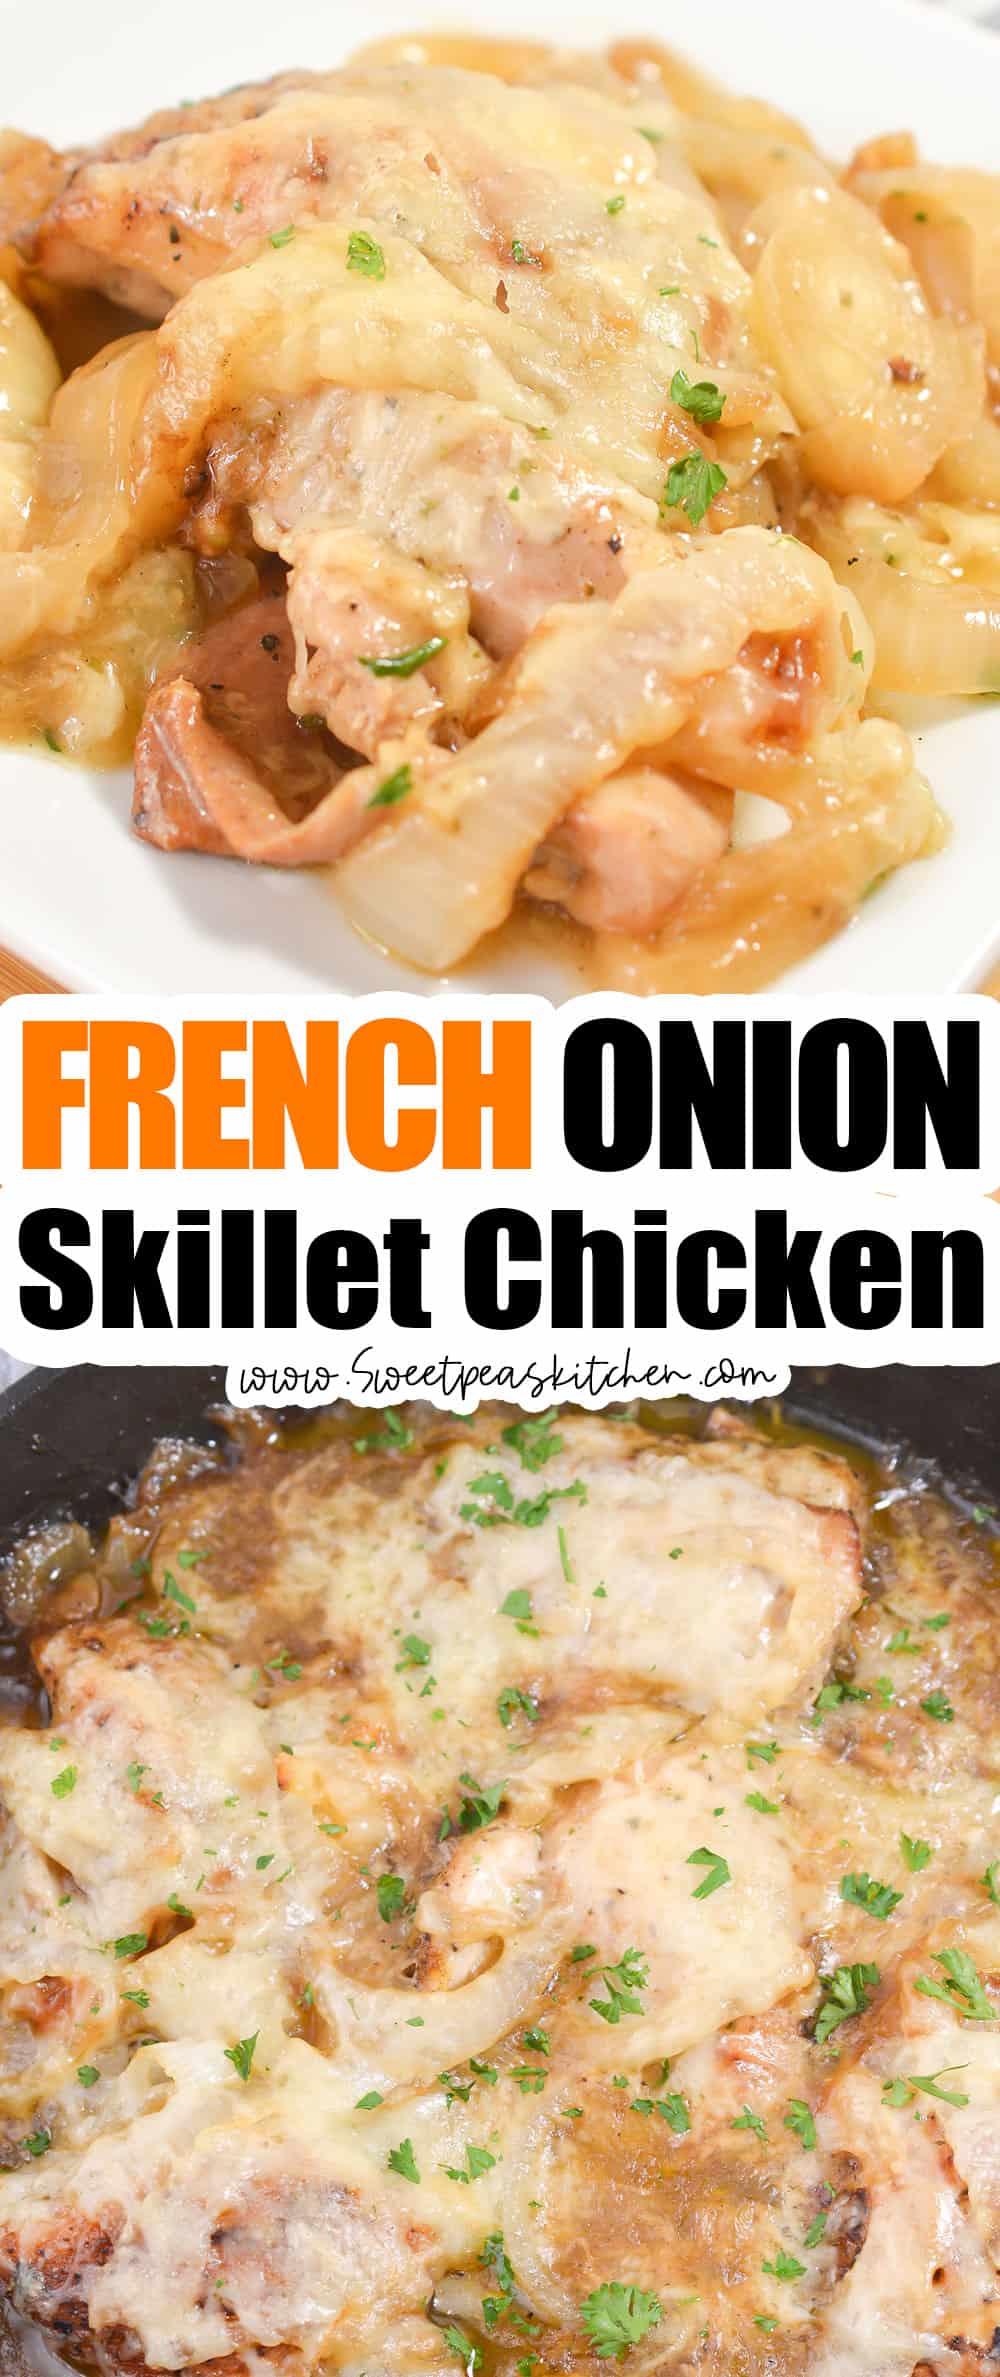 French Onion Skillet Chicken